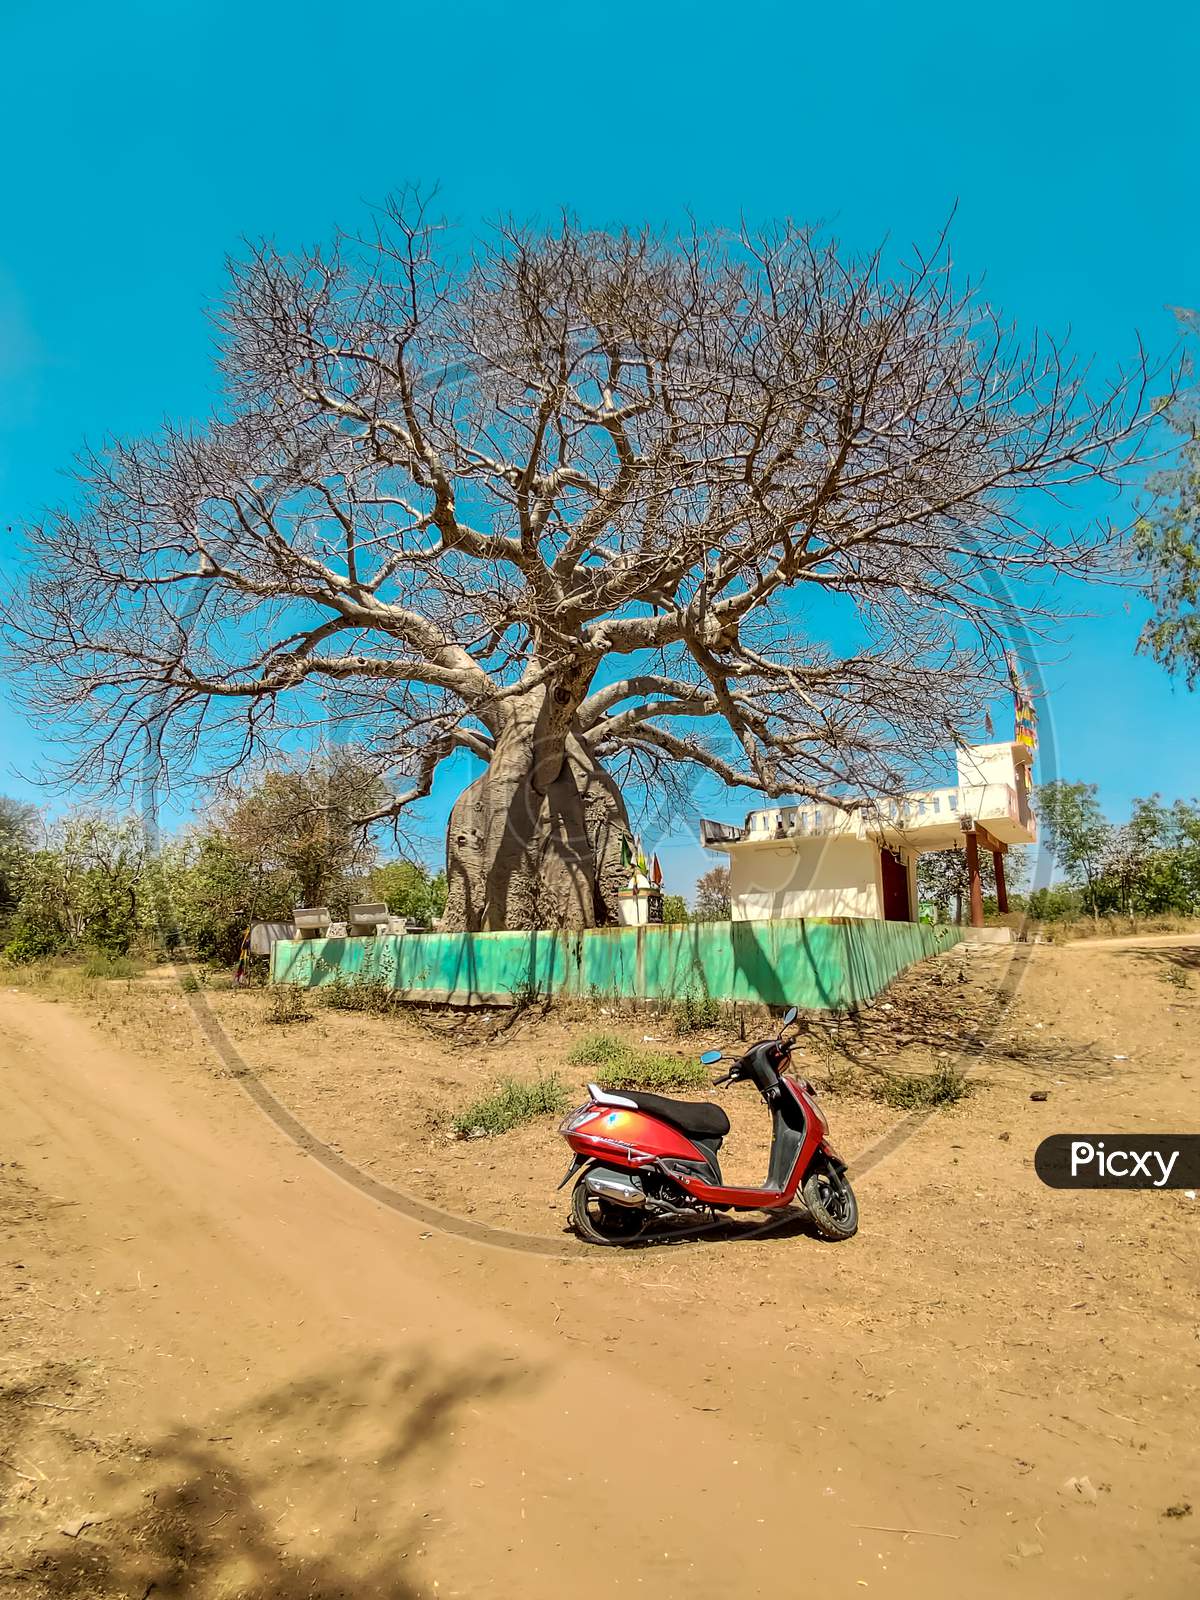 The great baobab tree